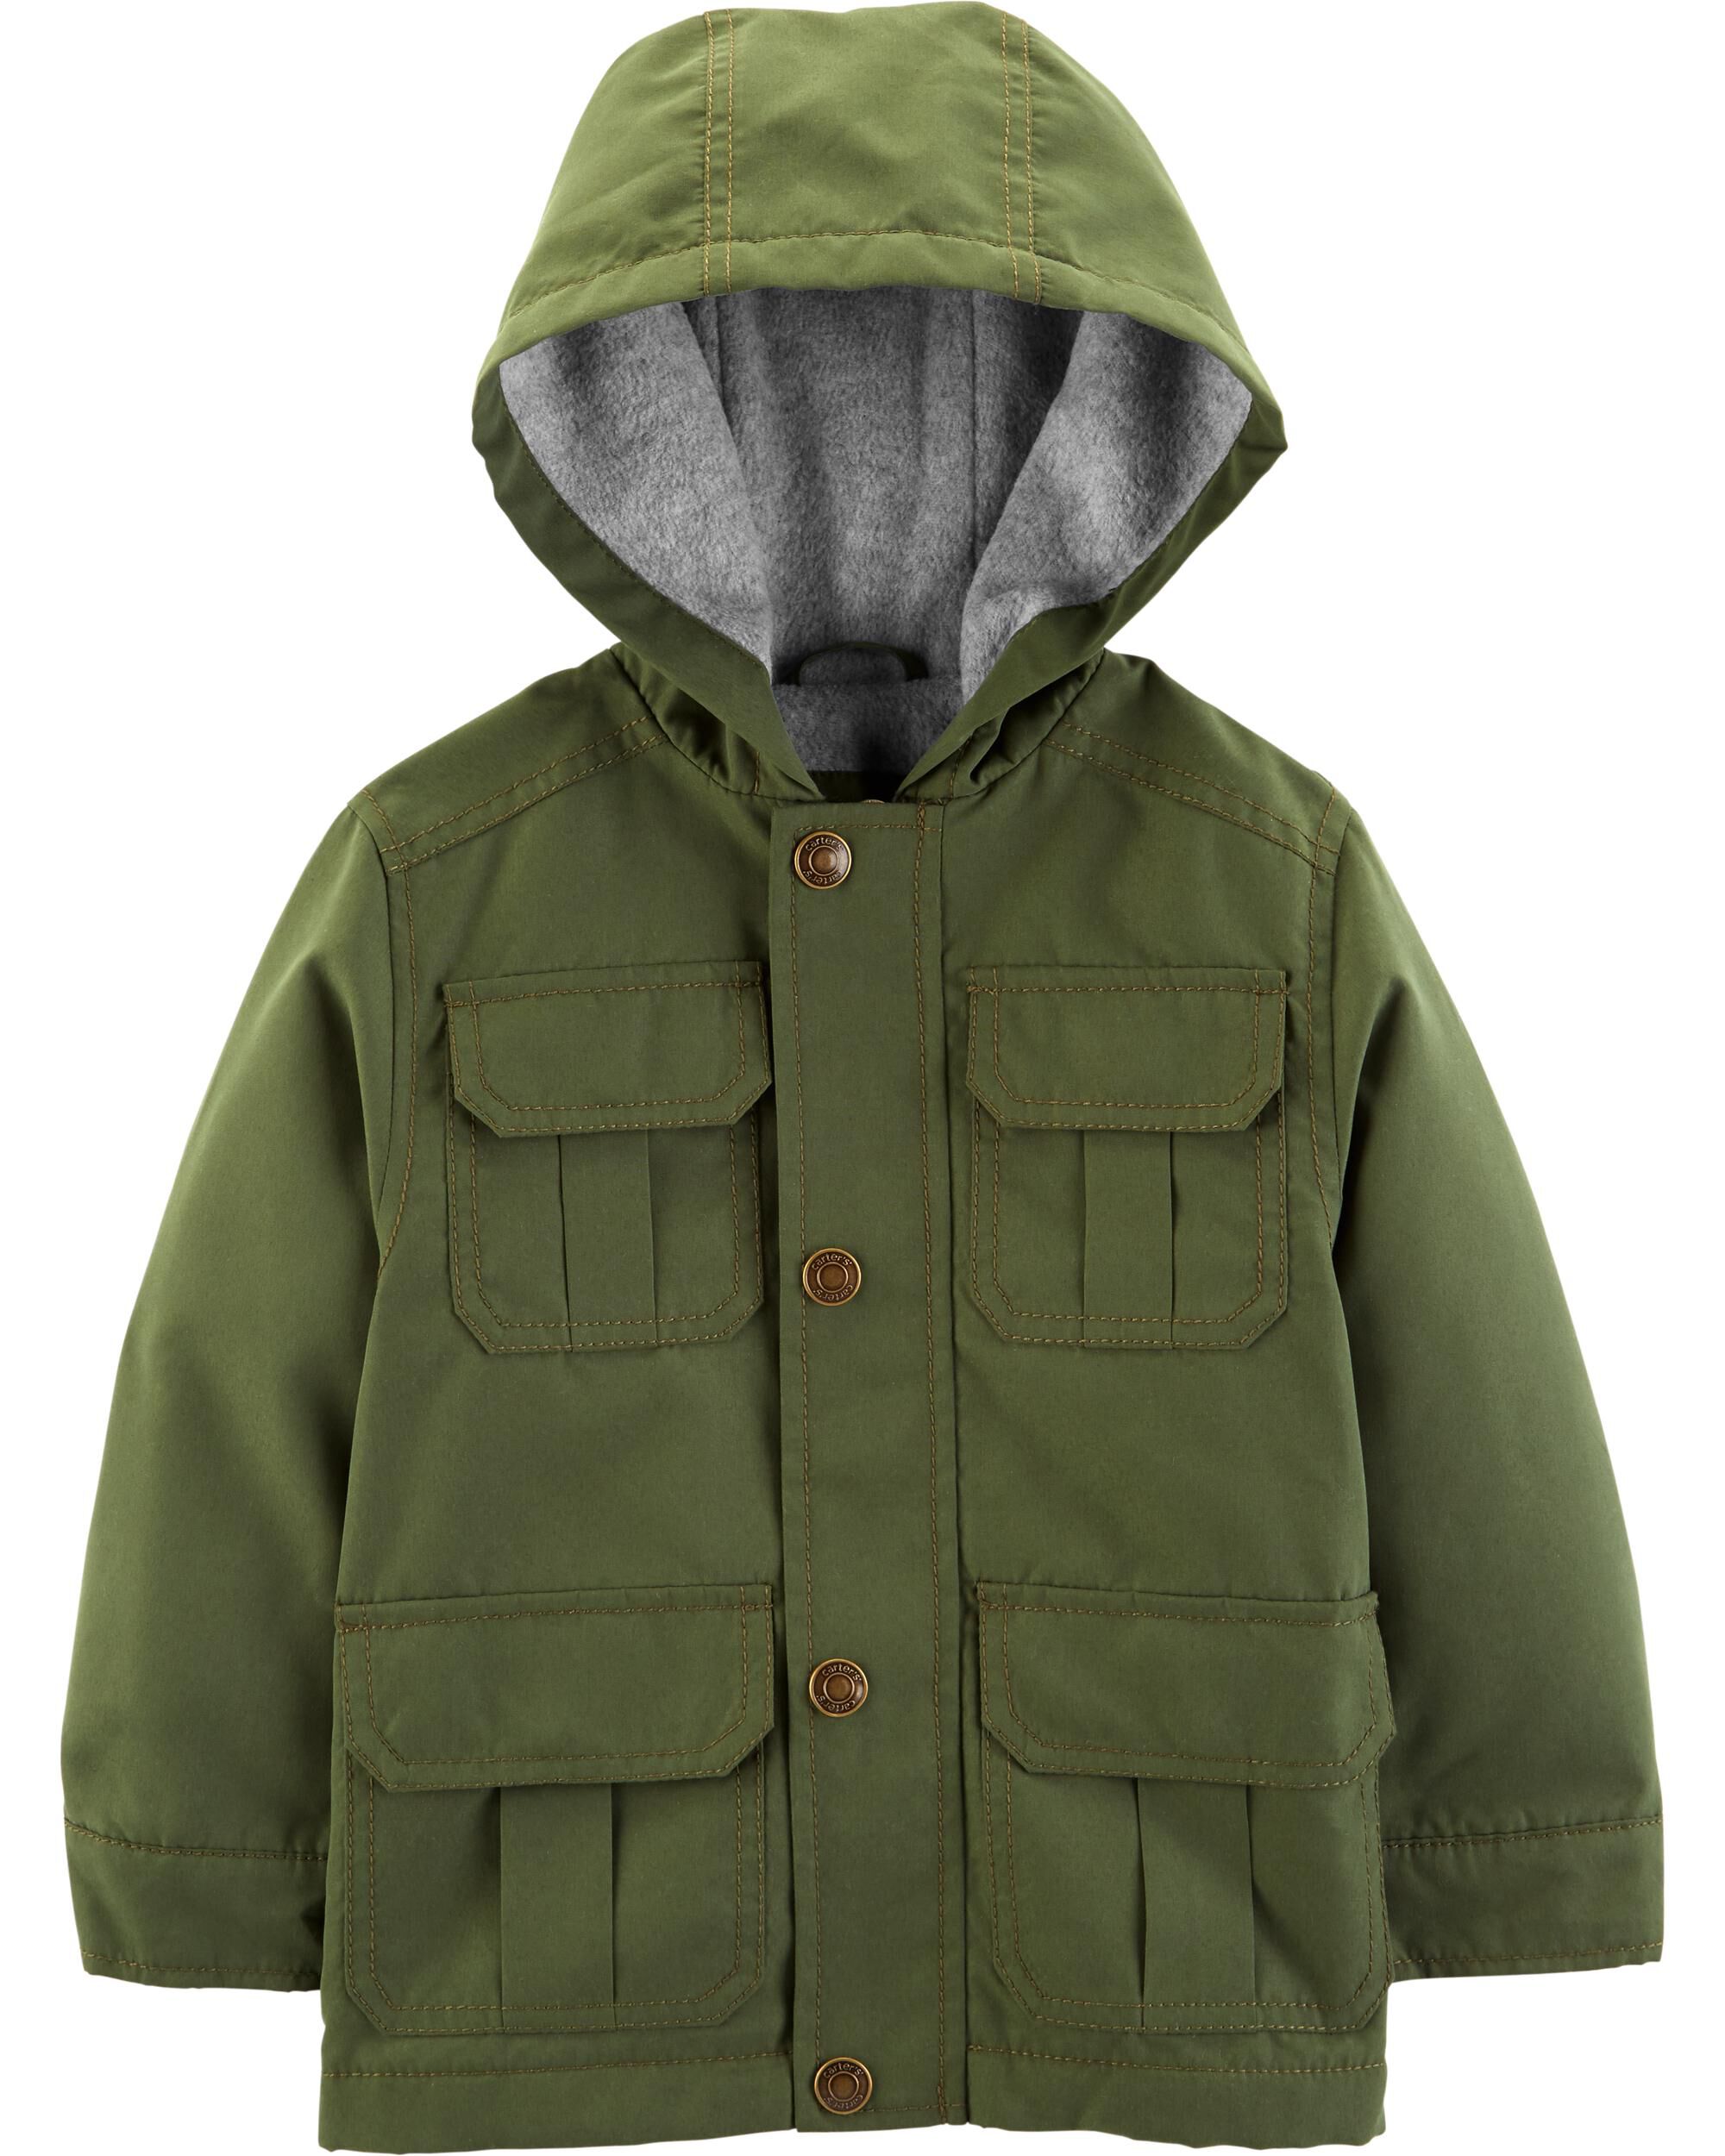 carter's fleece lined jacket